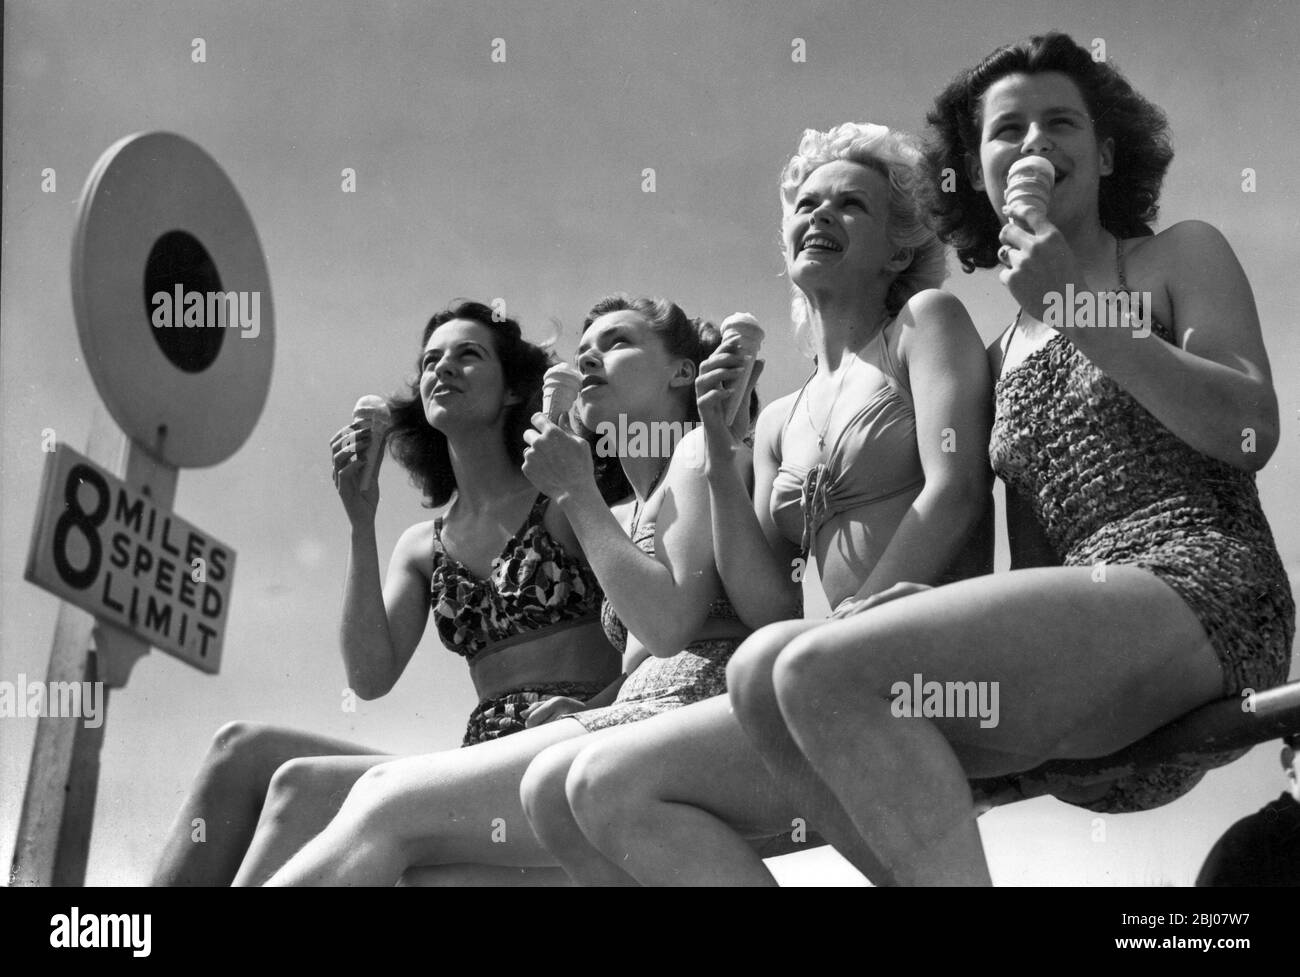 Young women bikini Black and White Stock Photos & Images - Alamy